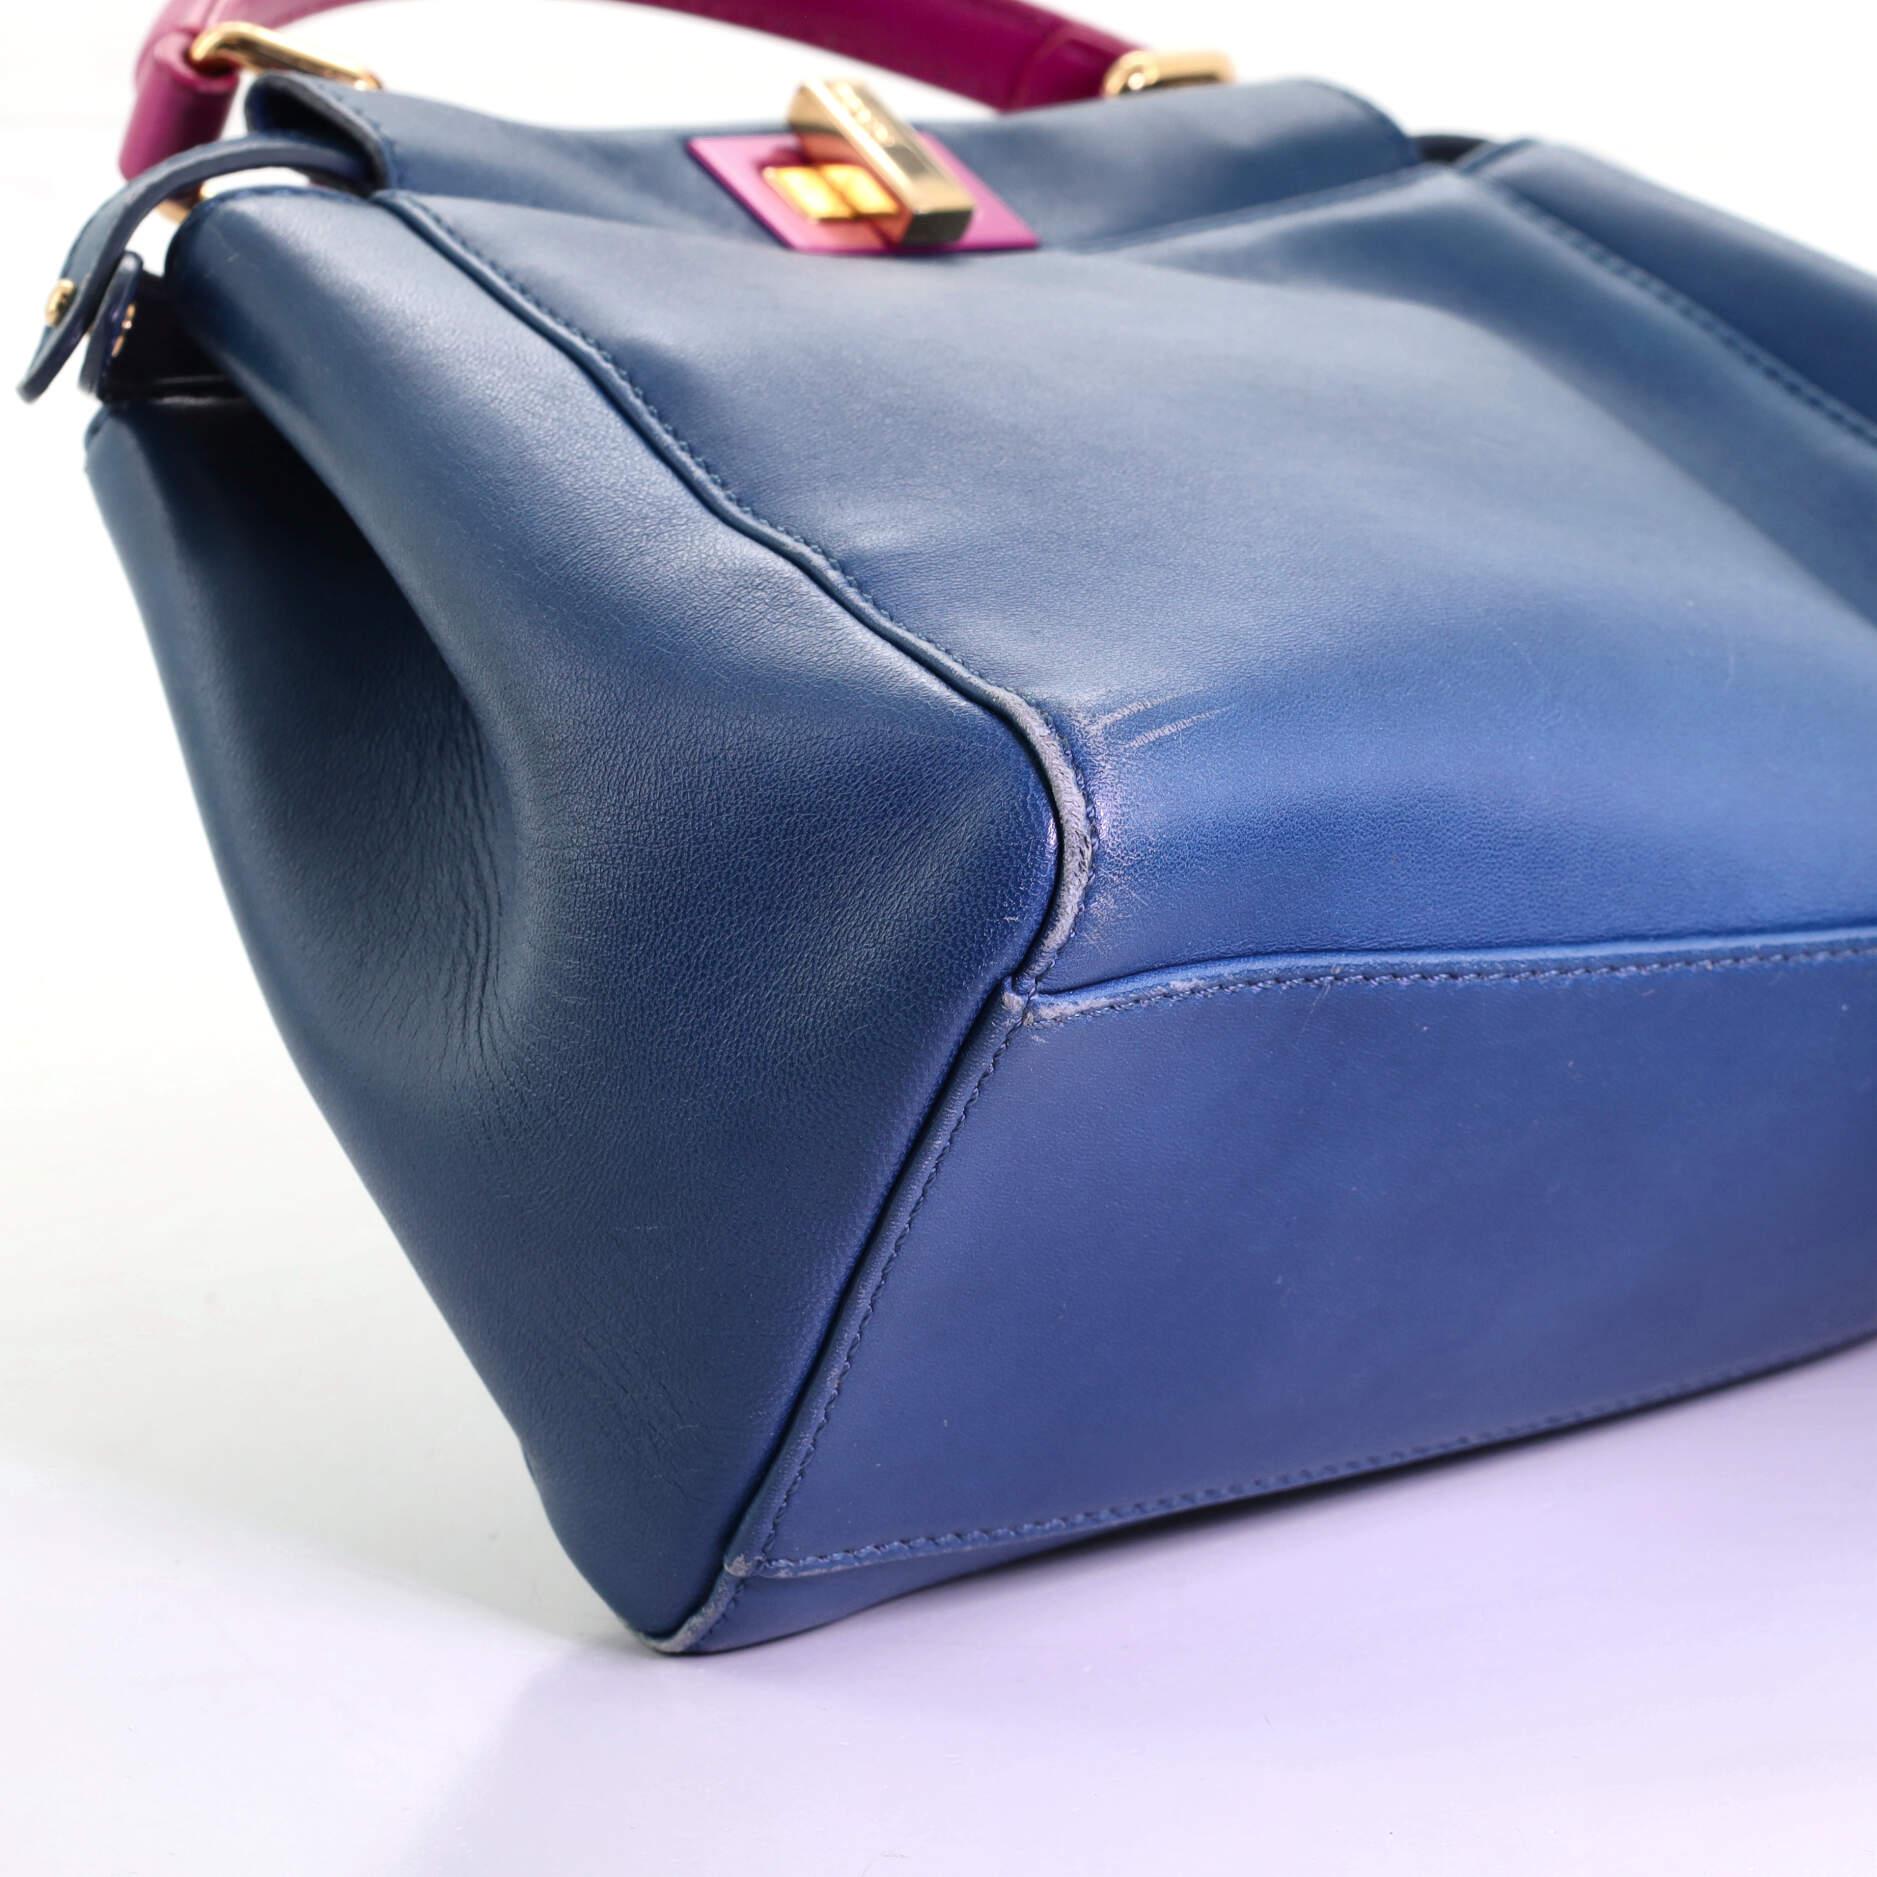 Blue Fendi Peekaboo Bag Leather Mini